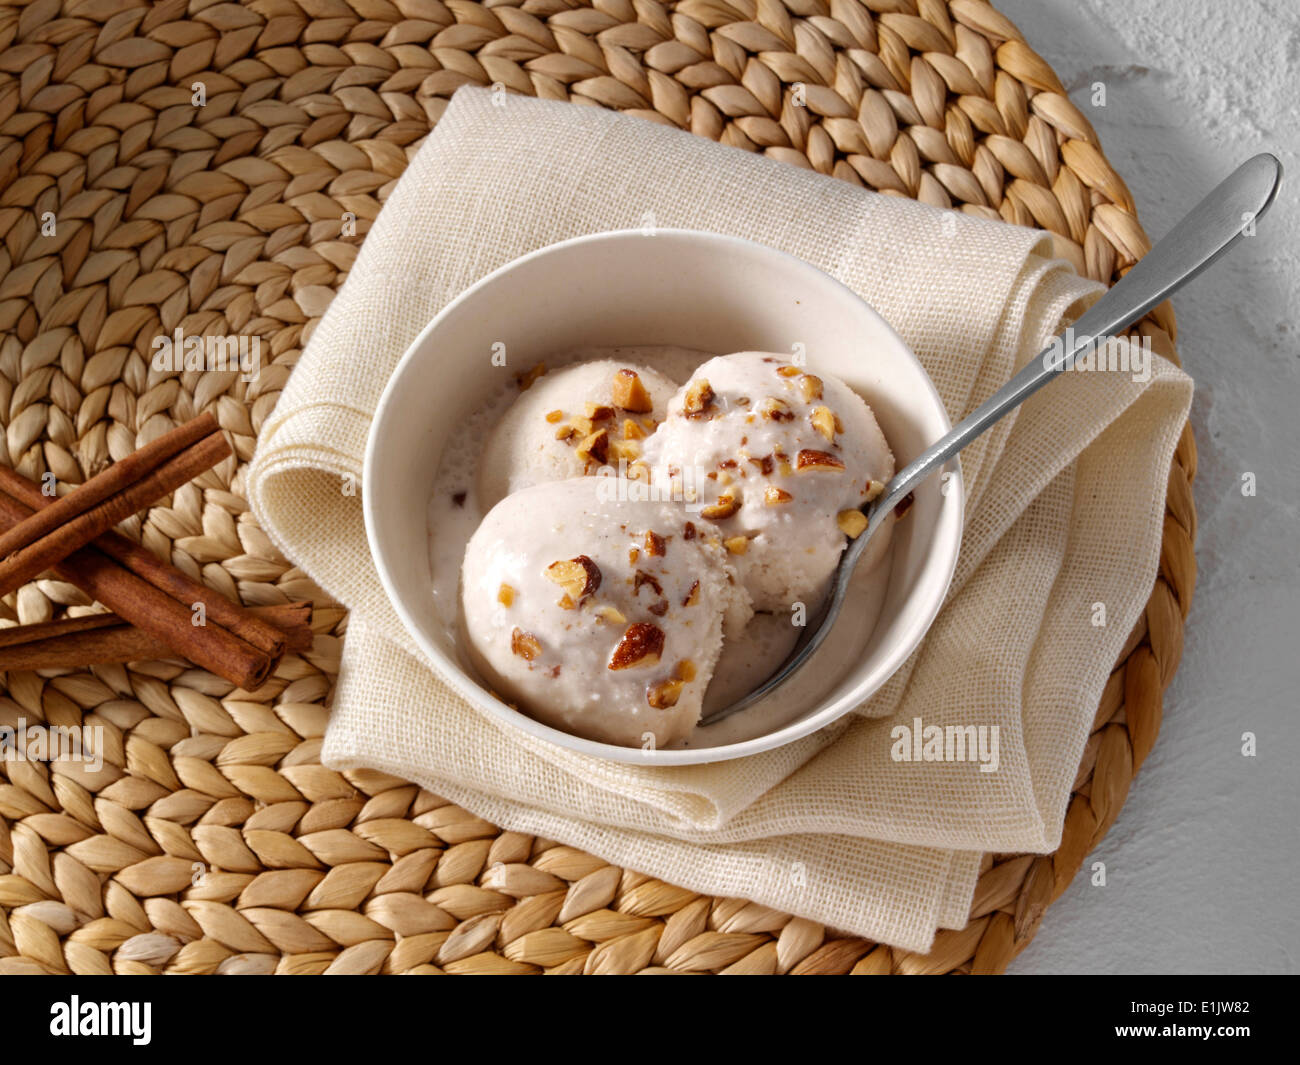 Canela almendra helado de coco Foto de stock